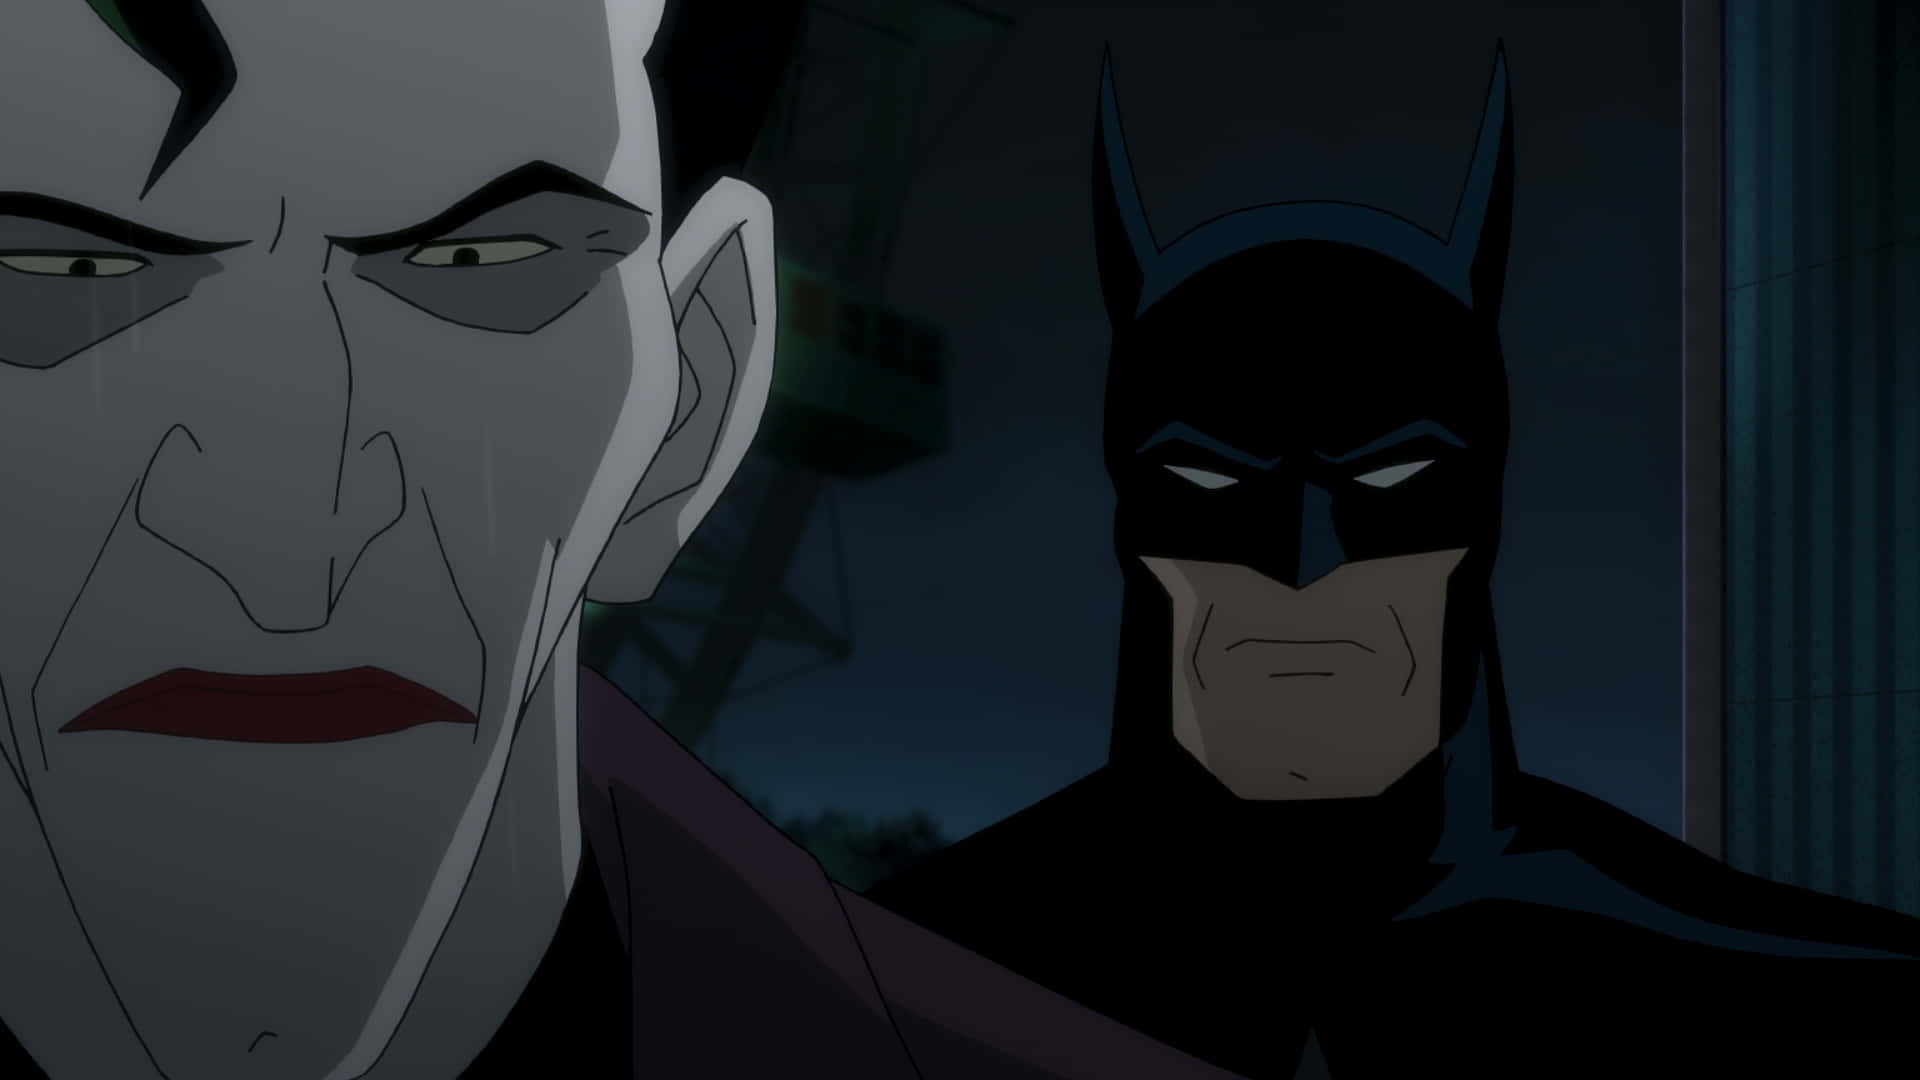 Batman and The Joker facing each other in Batman: The Killing Joke Wallpaper